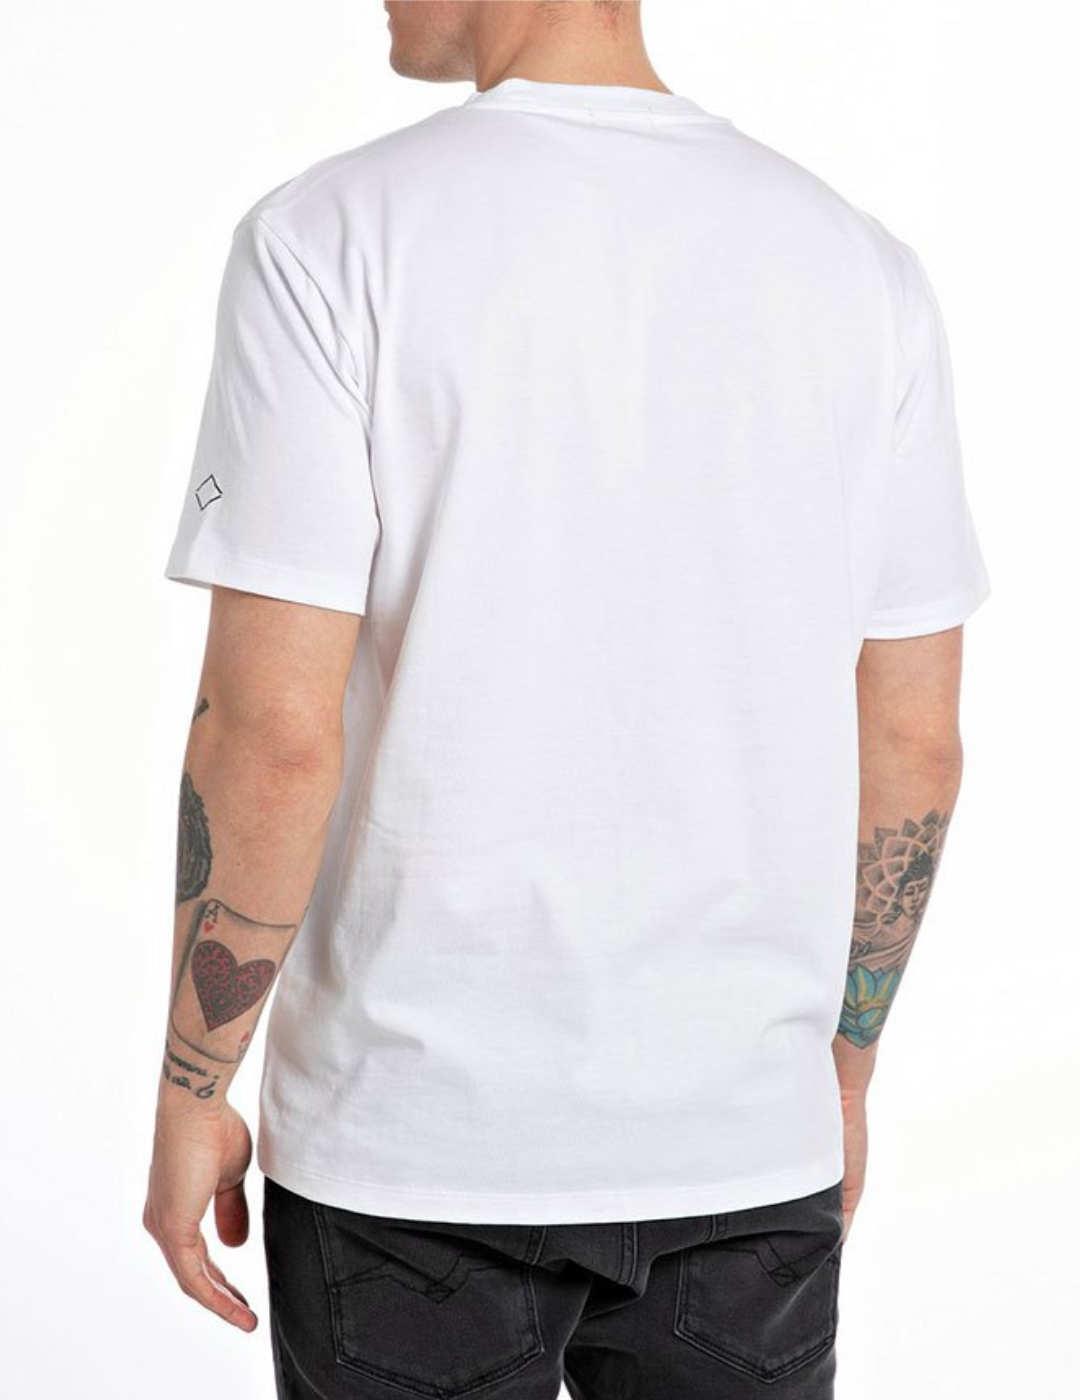 Camiseta Replay blanca dibujo de perro manga corta de hombre